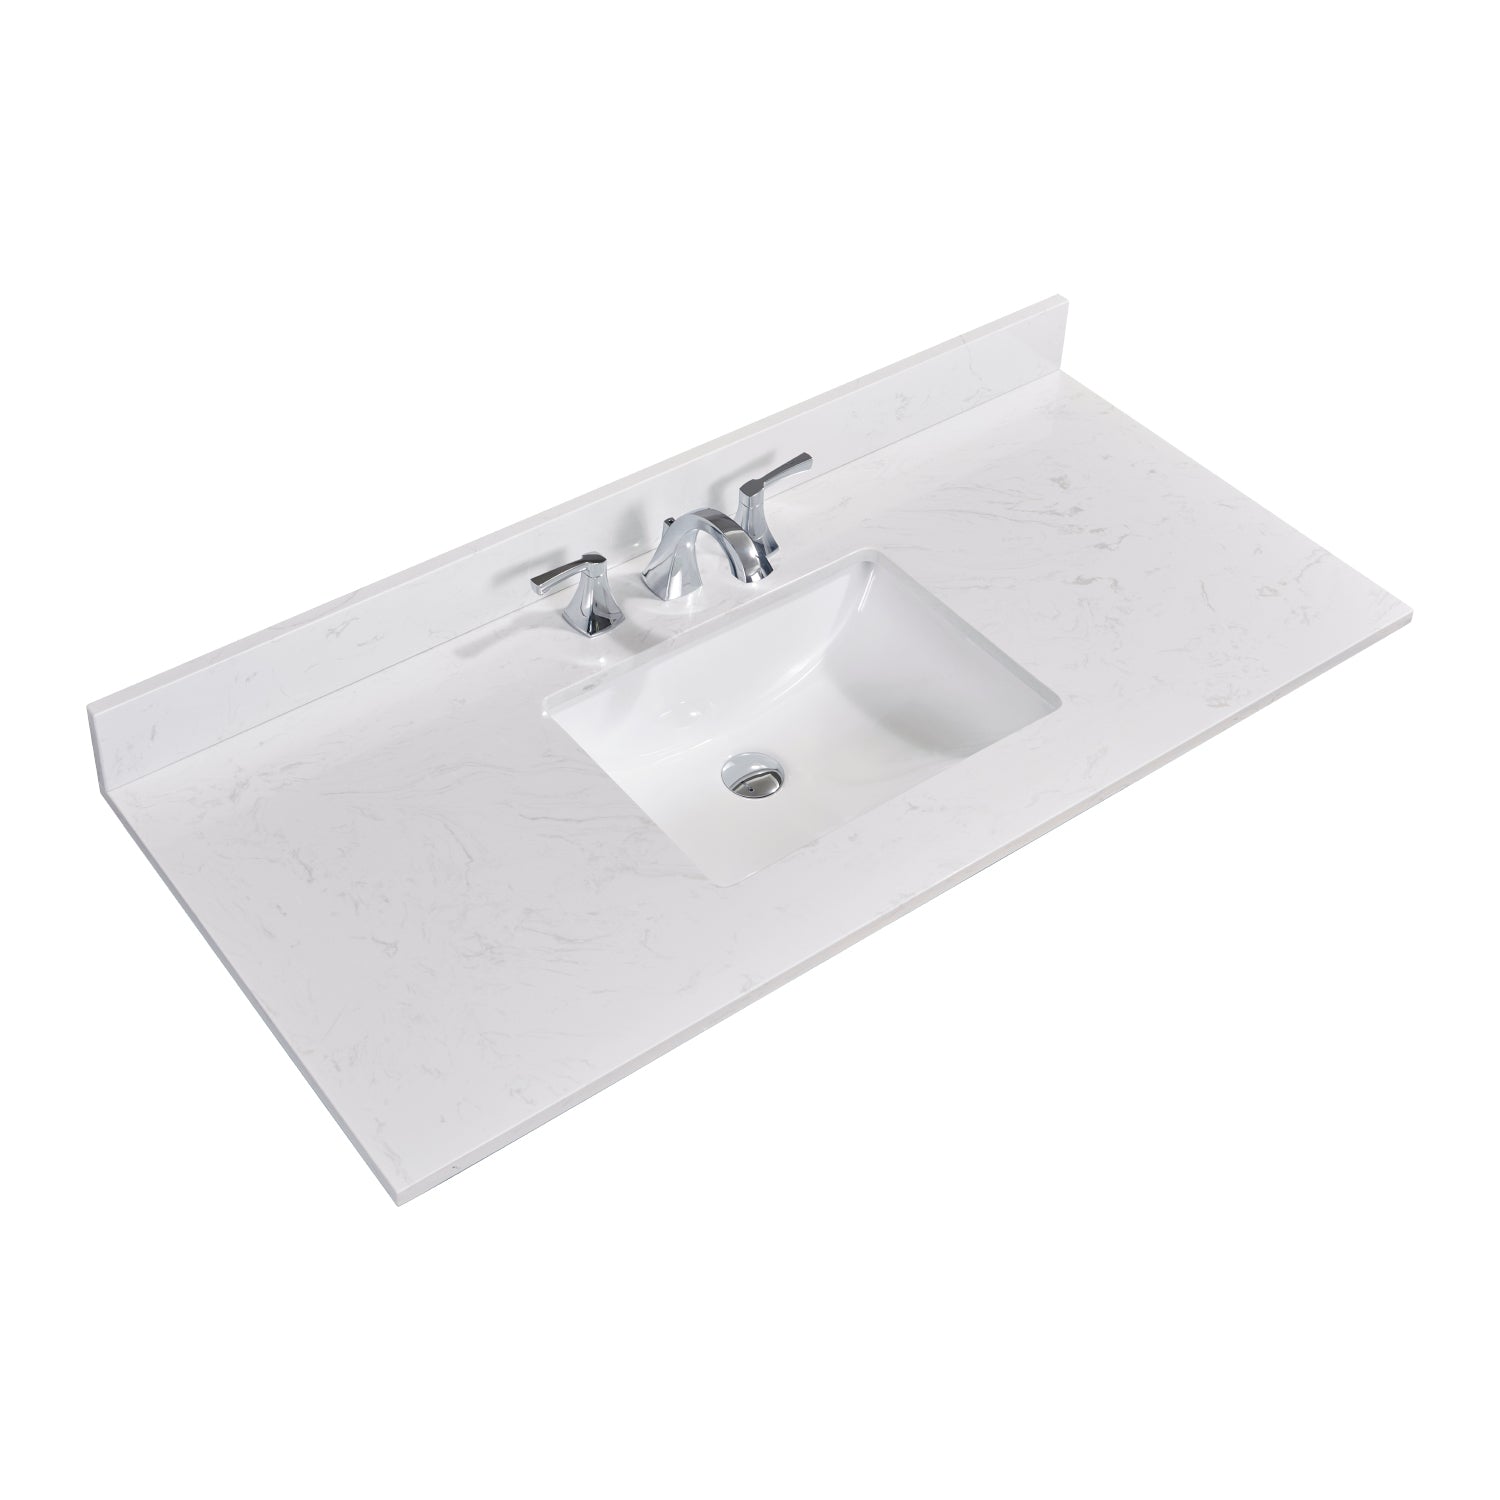 Frosinone Single Sink Bathroom Vanity Countertop in Jazz White